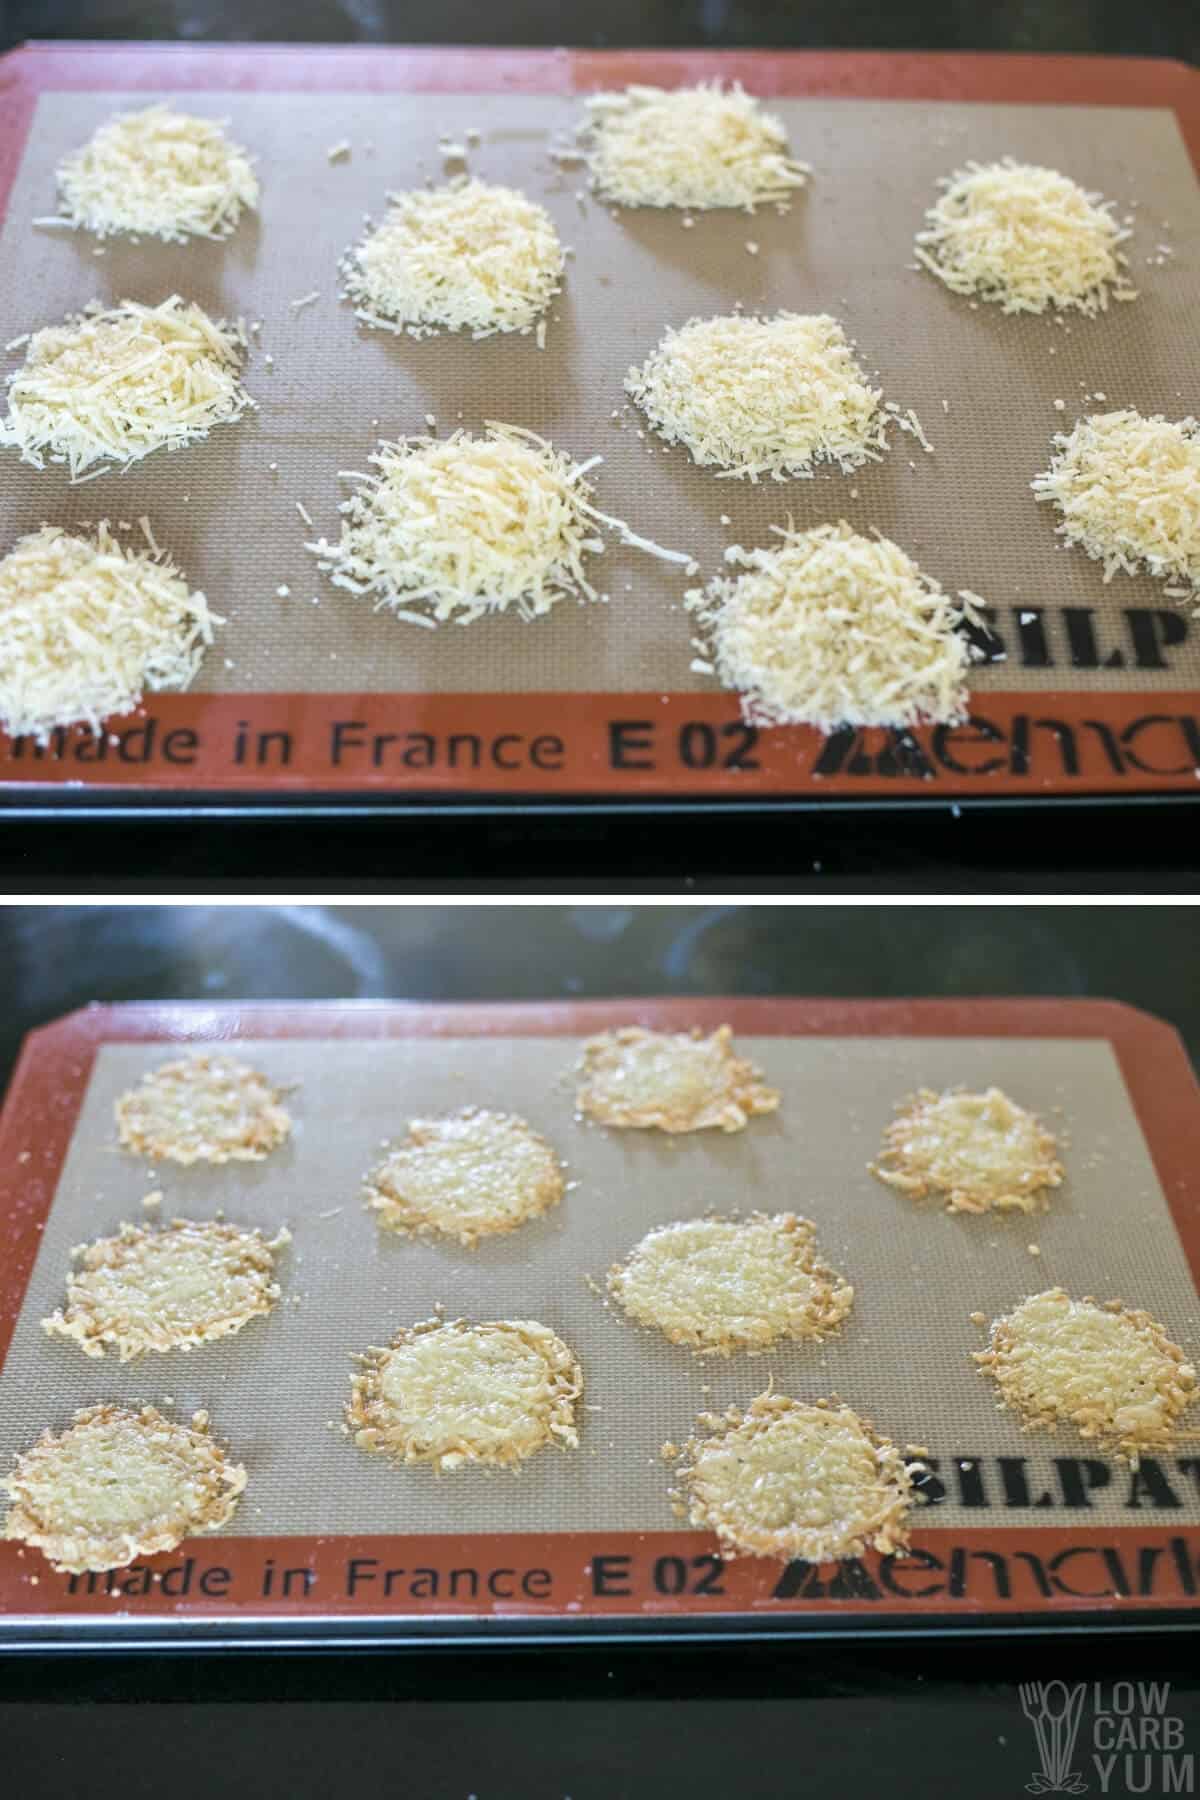 baking the parmesan cheese